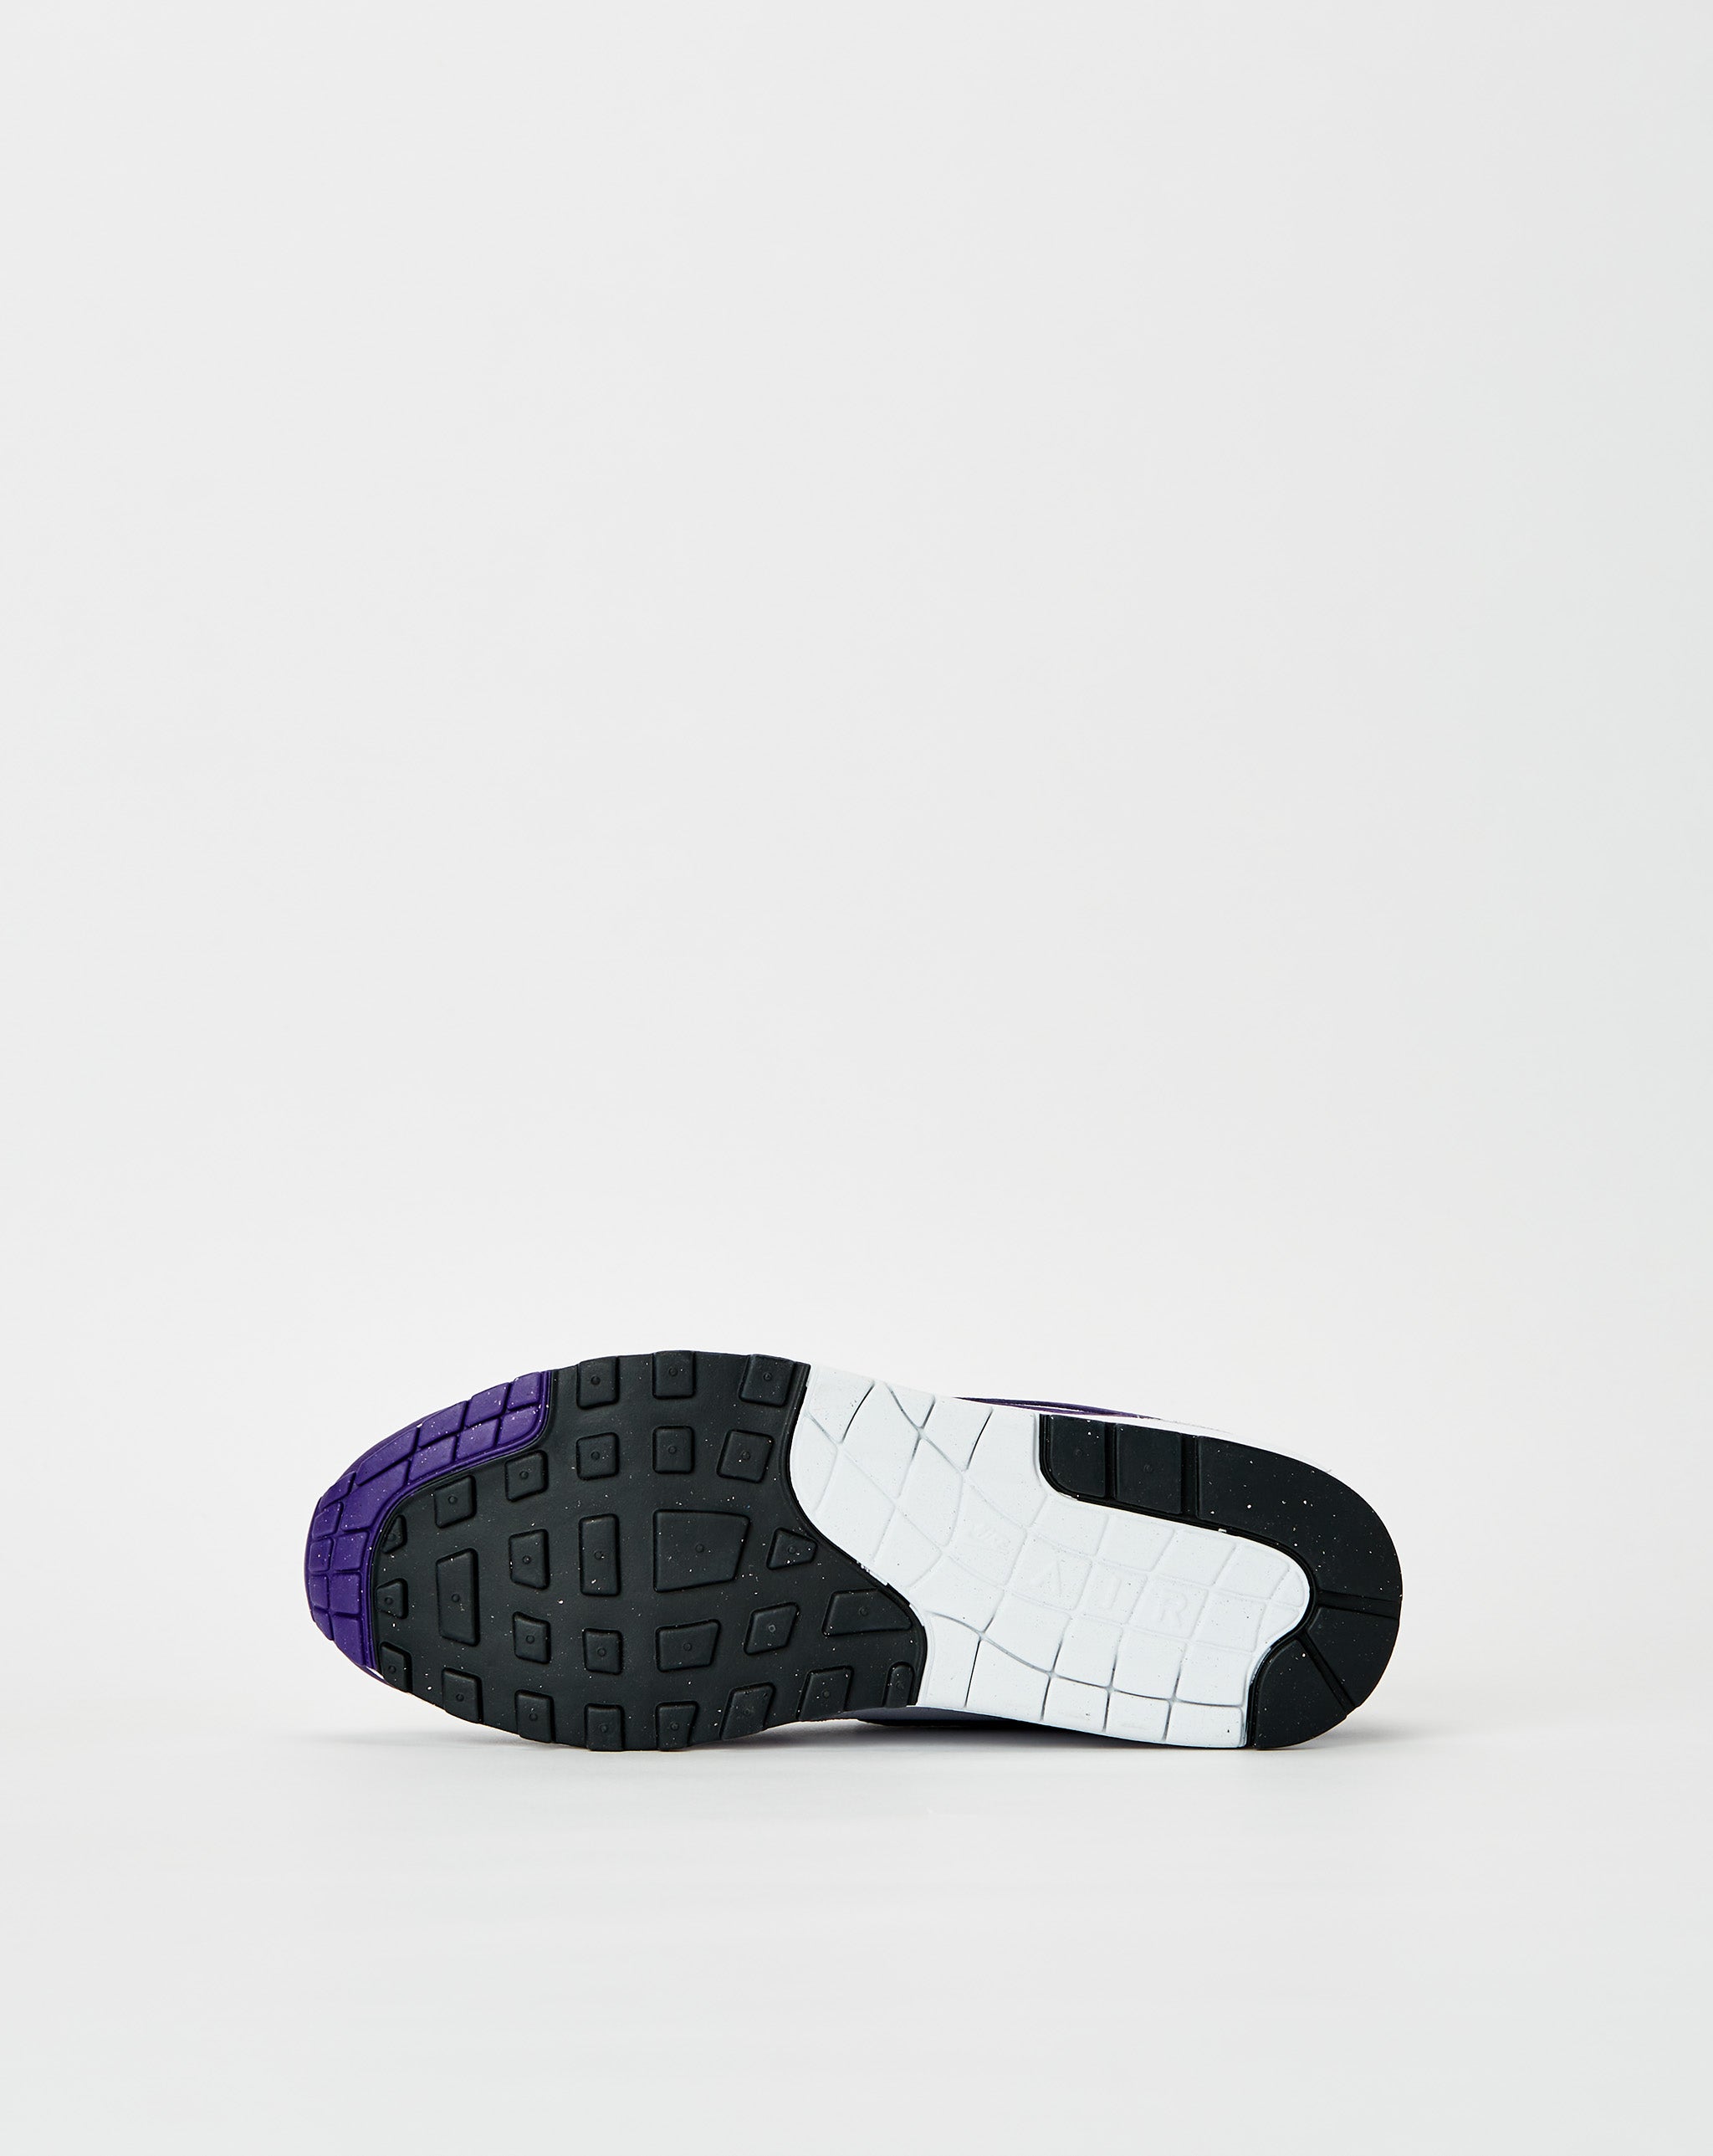 Nike Sneakers GIOSEPPO Lasko 65503 Camouflage  - Cheap Cerbe Jordan outlet